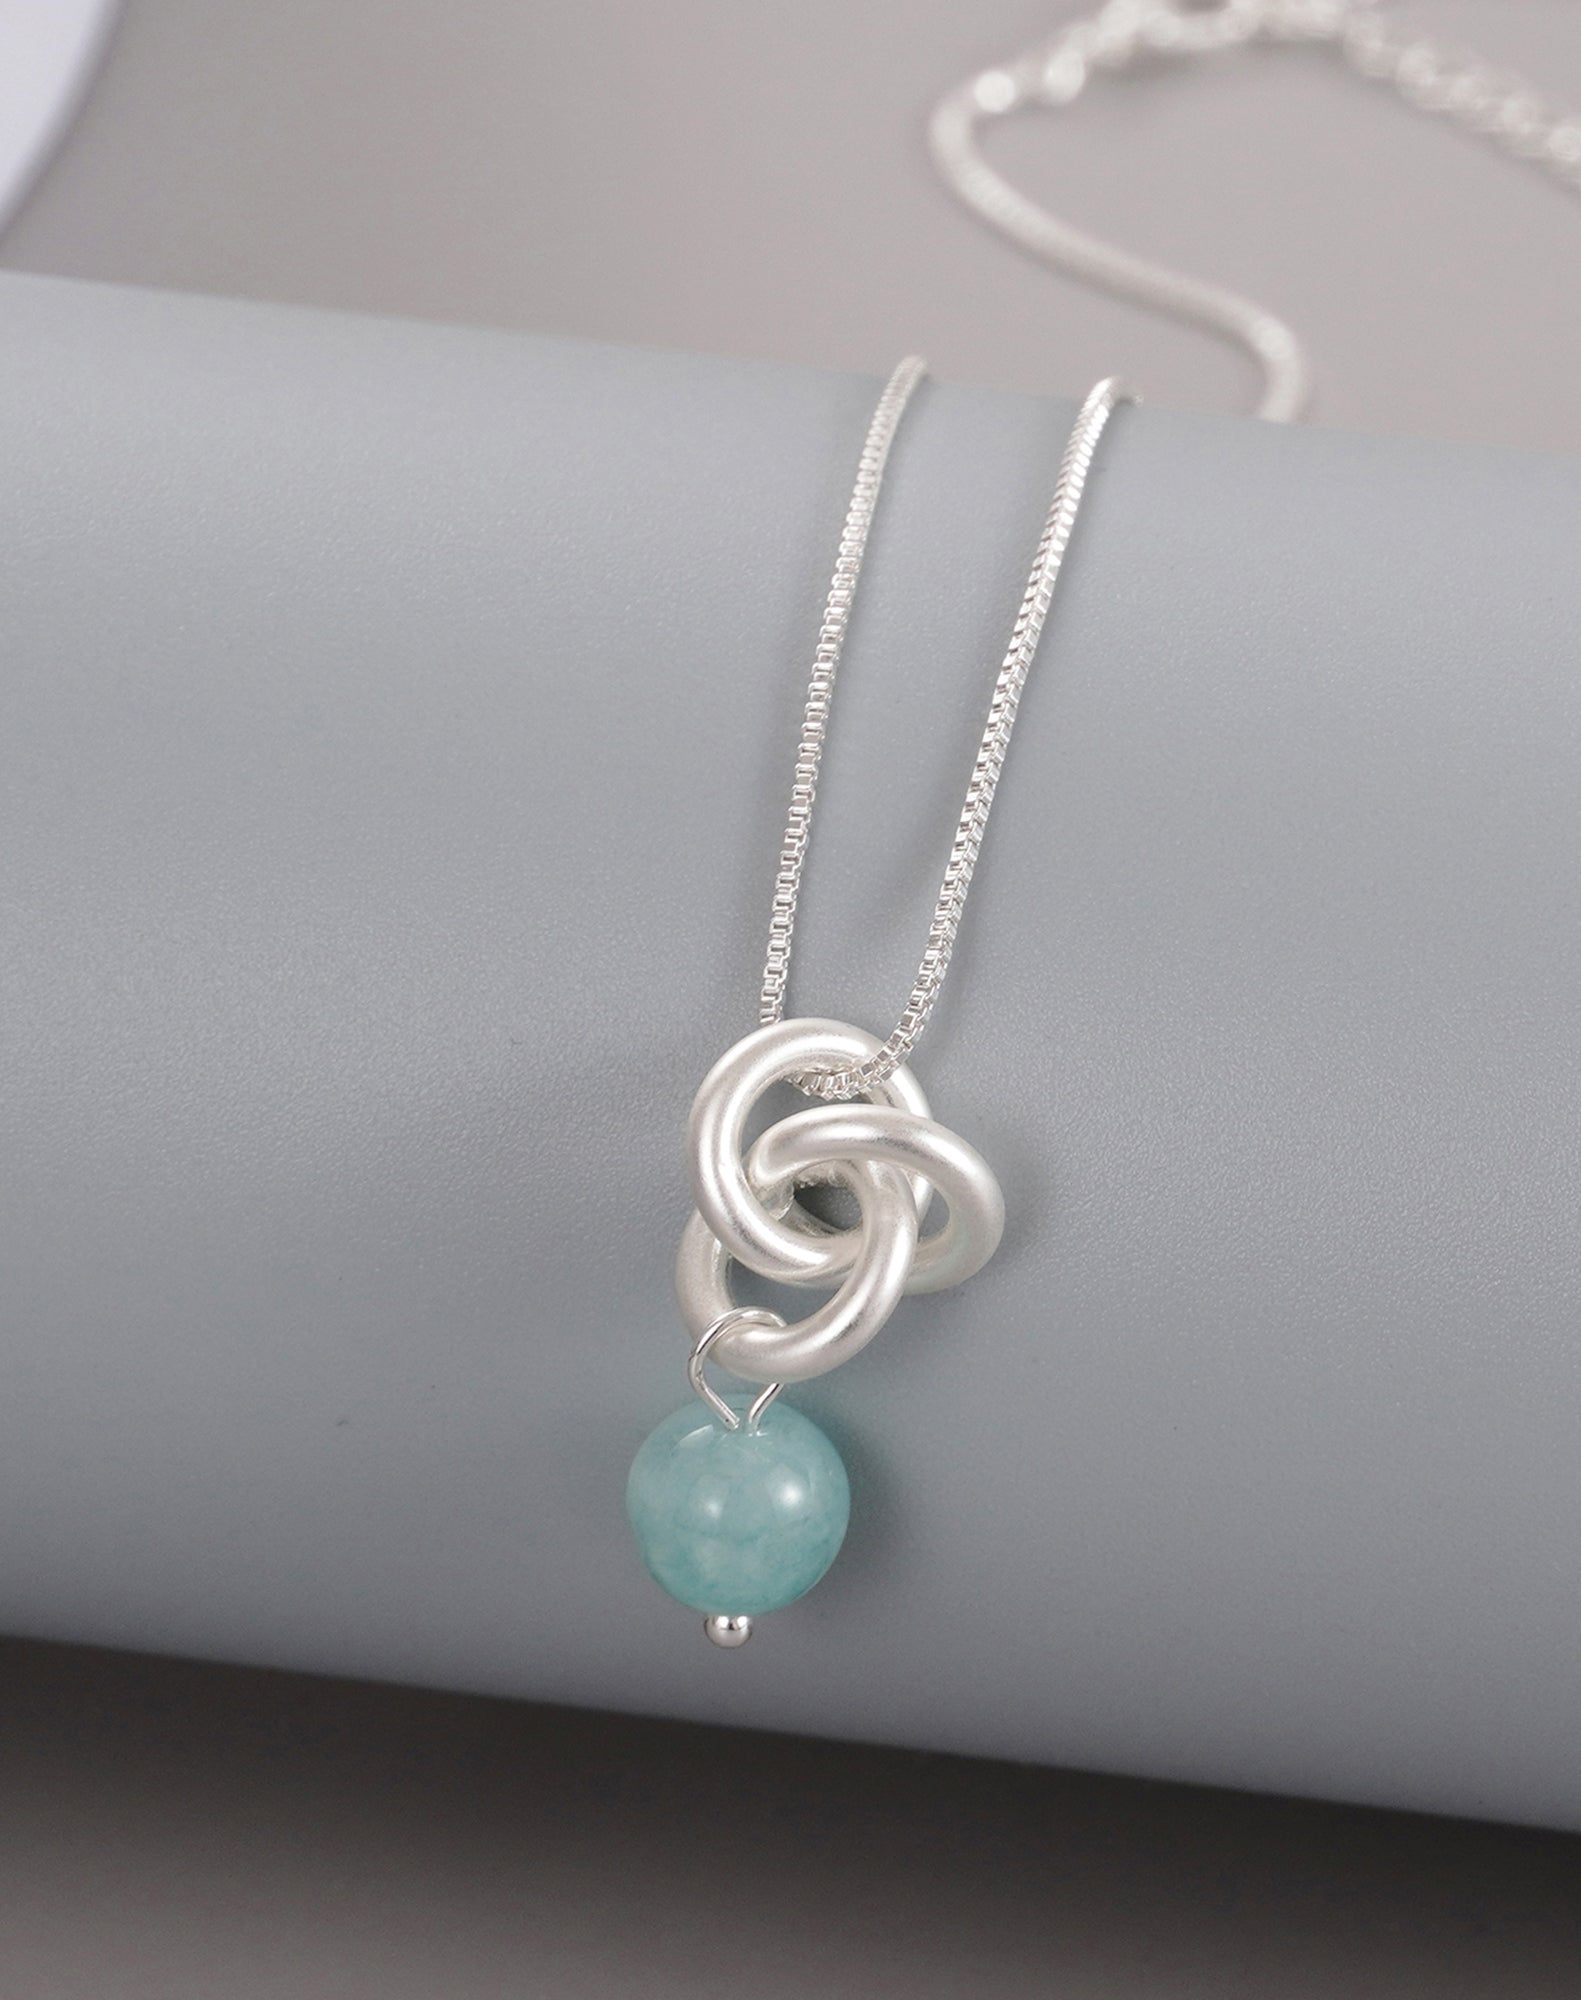 Blue Bead Necklace - The Nancy Smillie Shop - Art, Jewellery & Designer Gifts Glasgow